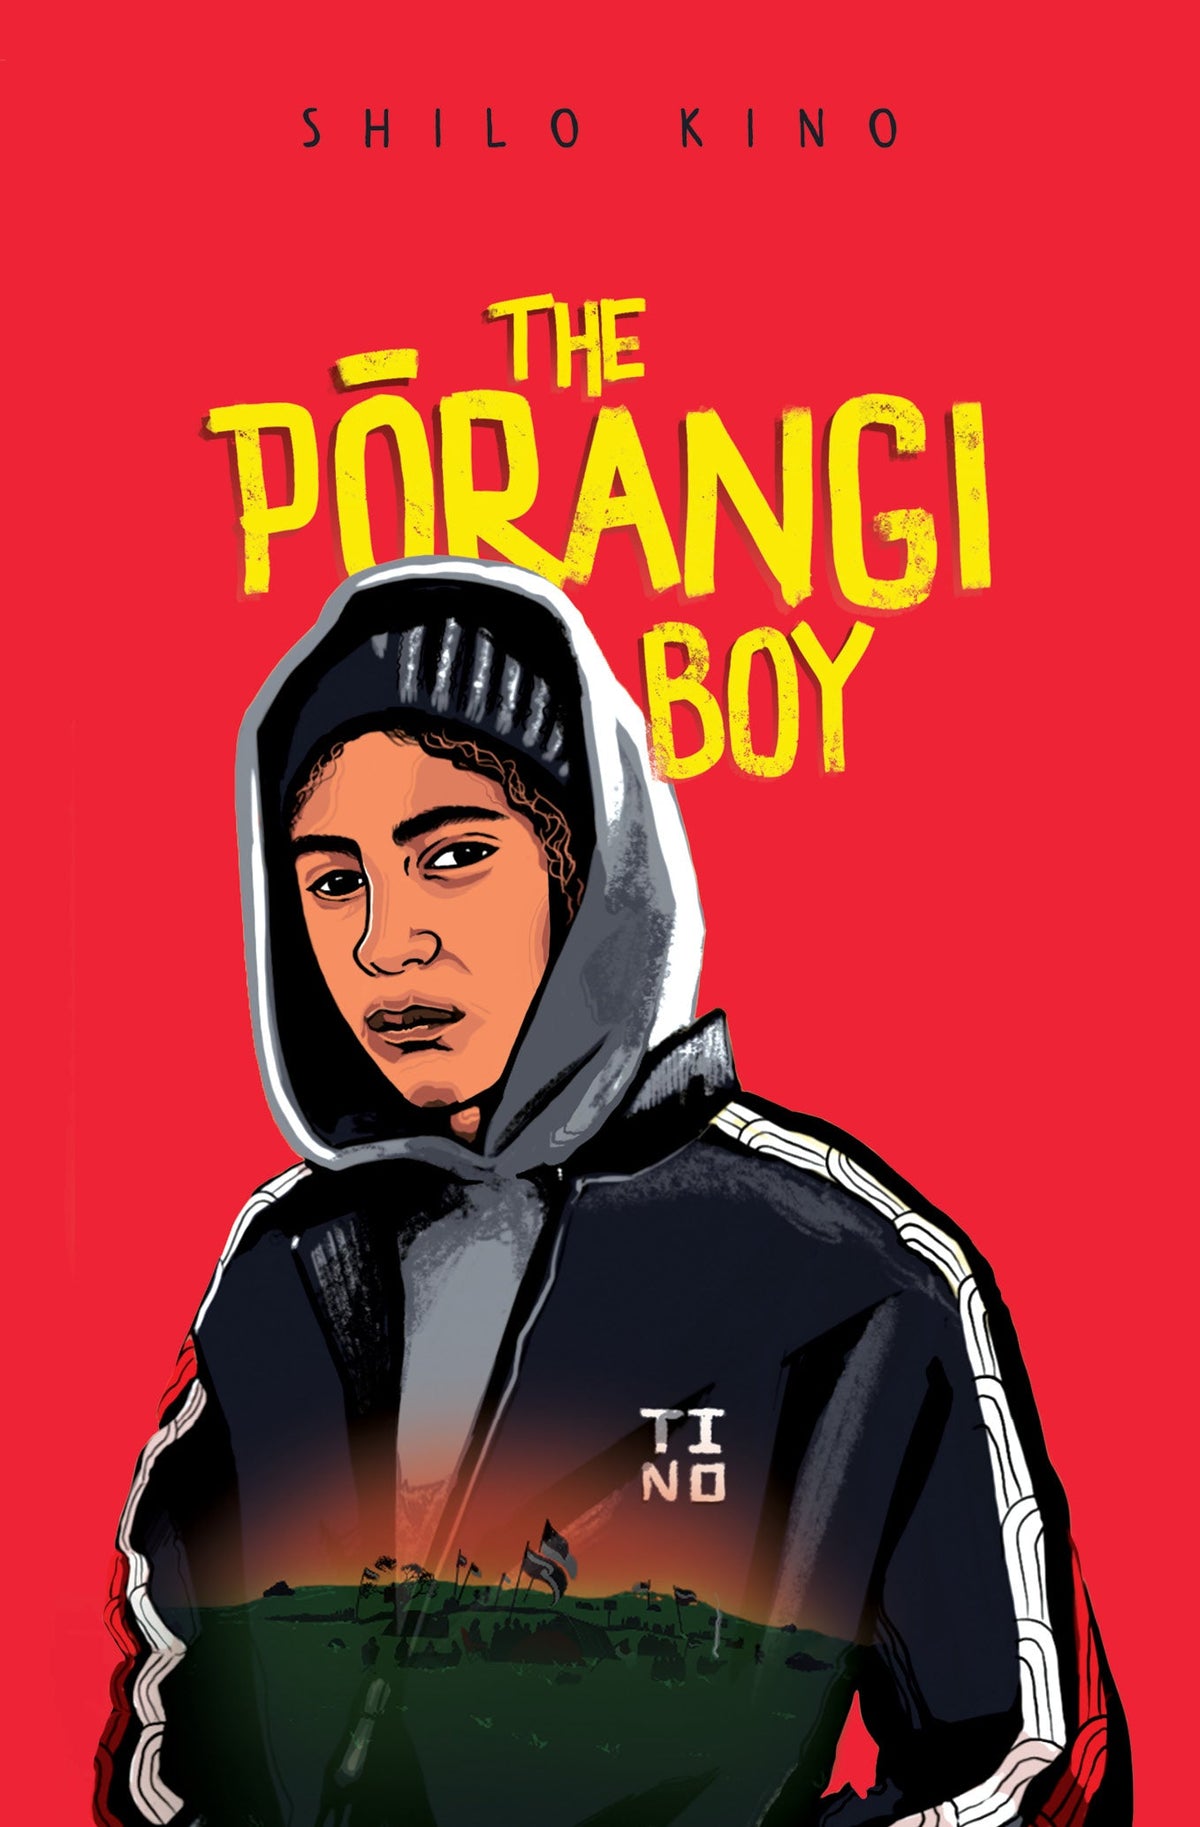 The Pōrangi Boy by Shilo Kino